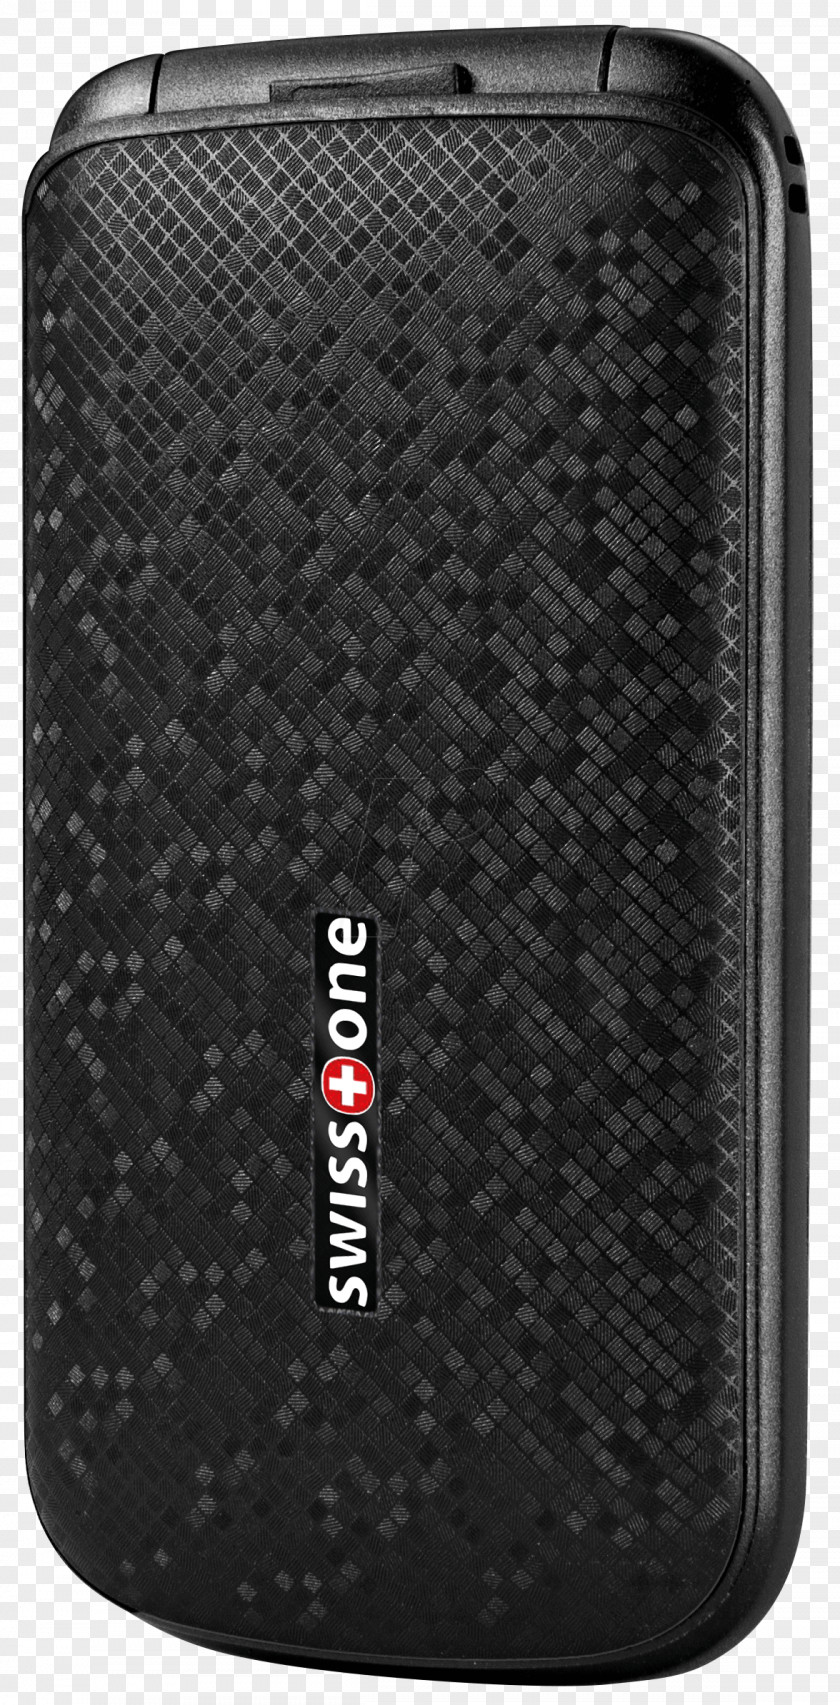 Single Tone Swisstone SC550 Hardware/Electronic SC 330 Flip Top Mobile Phone Feature Accessories Design PNG